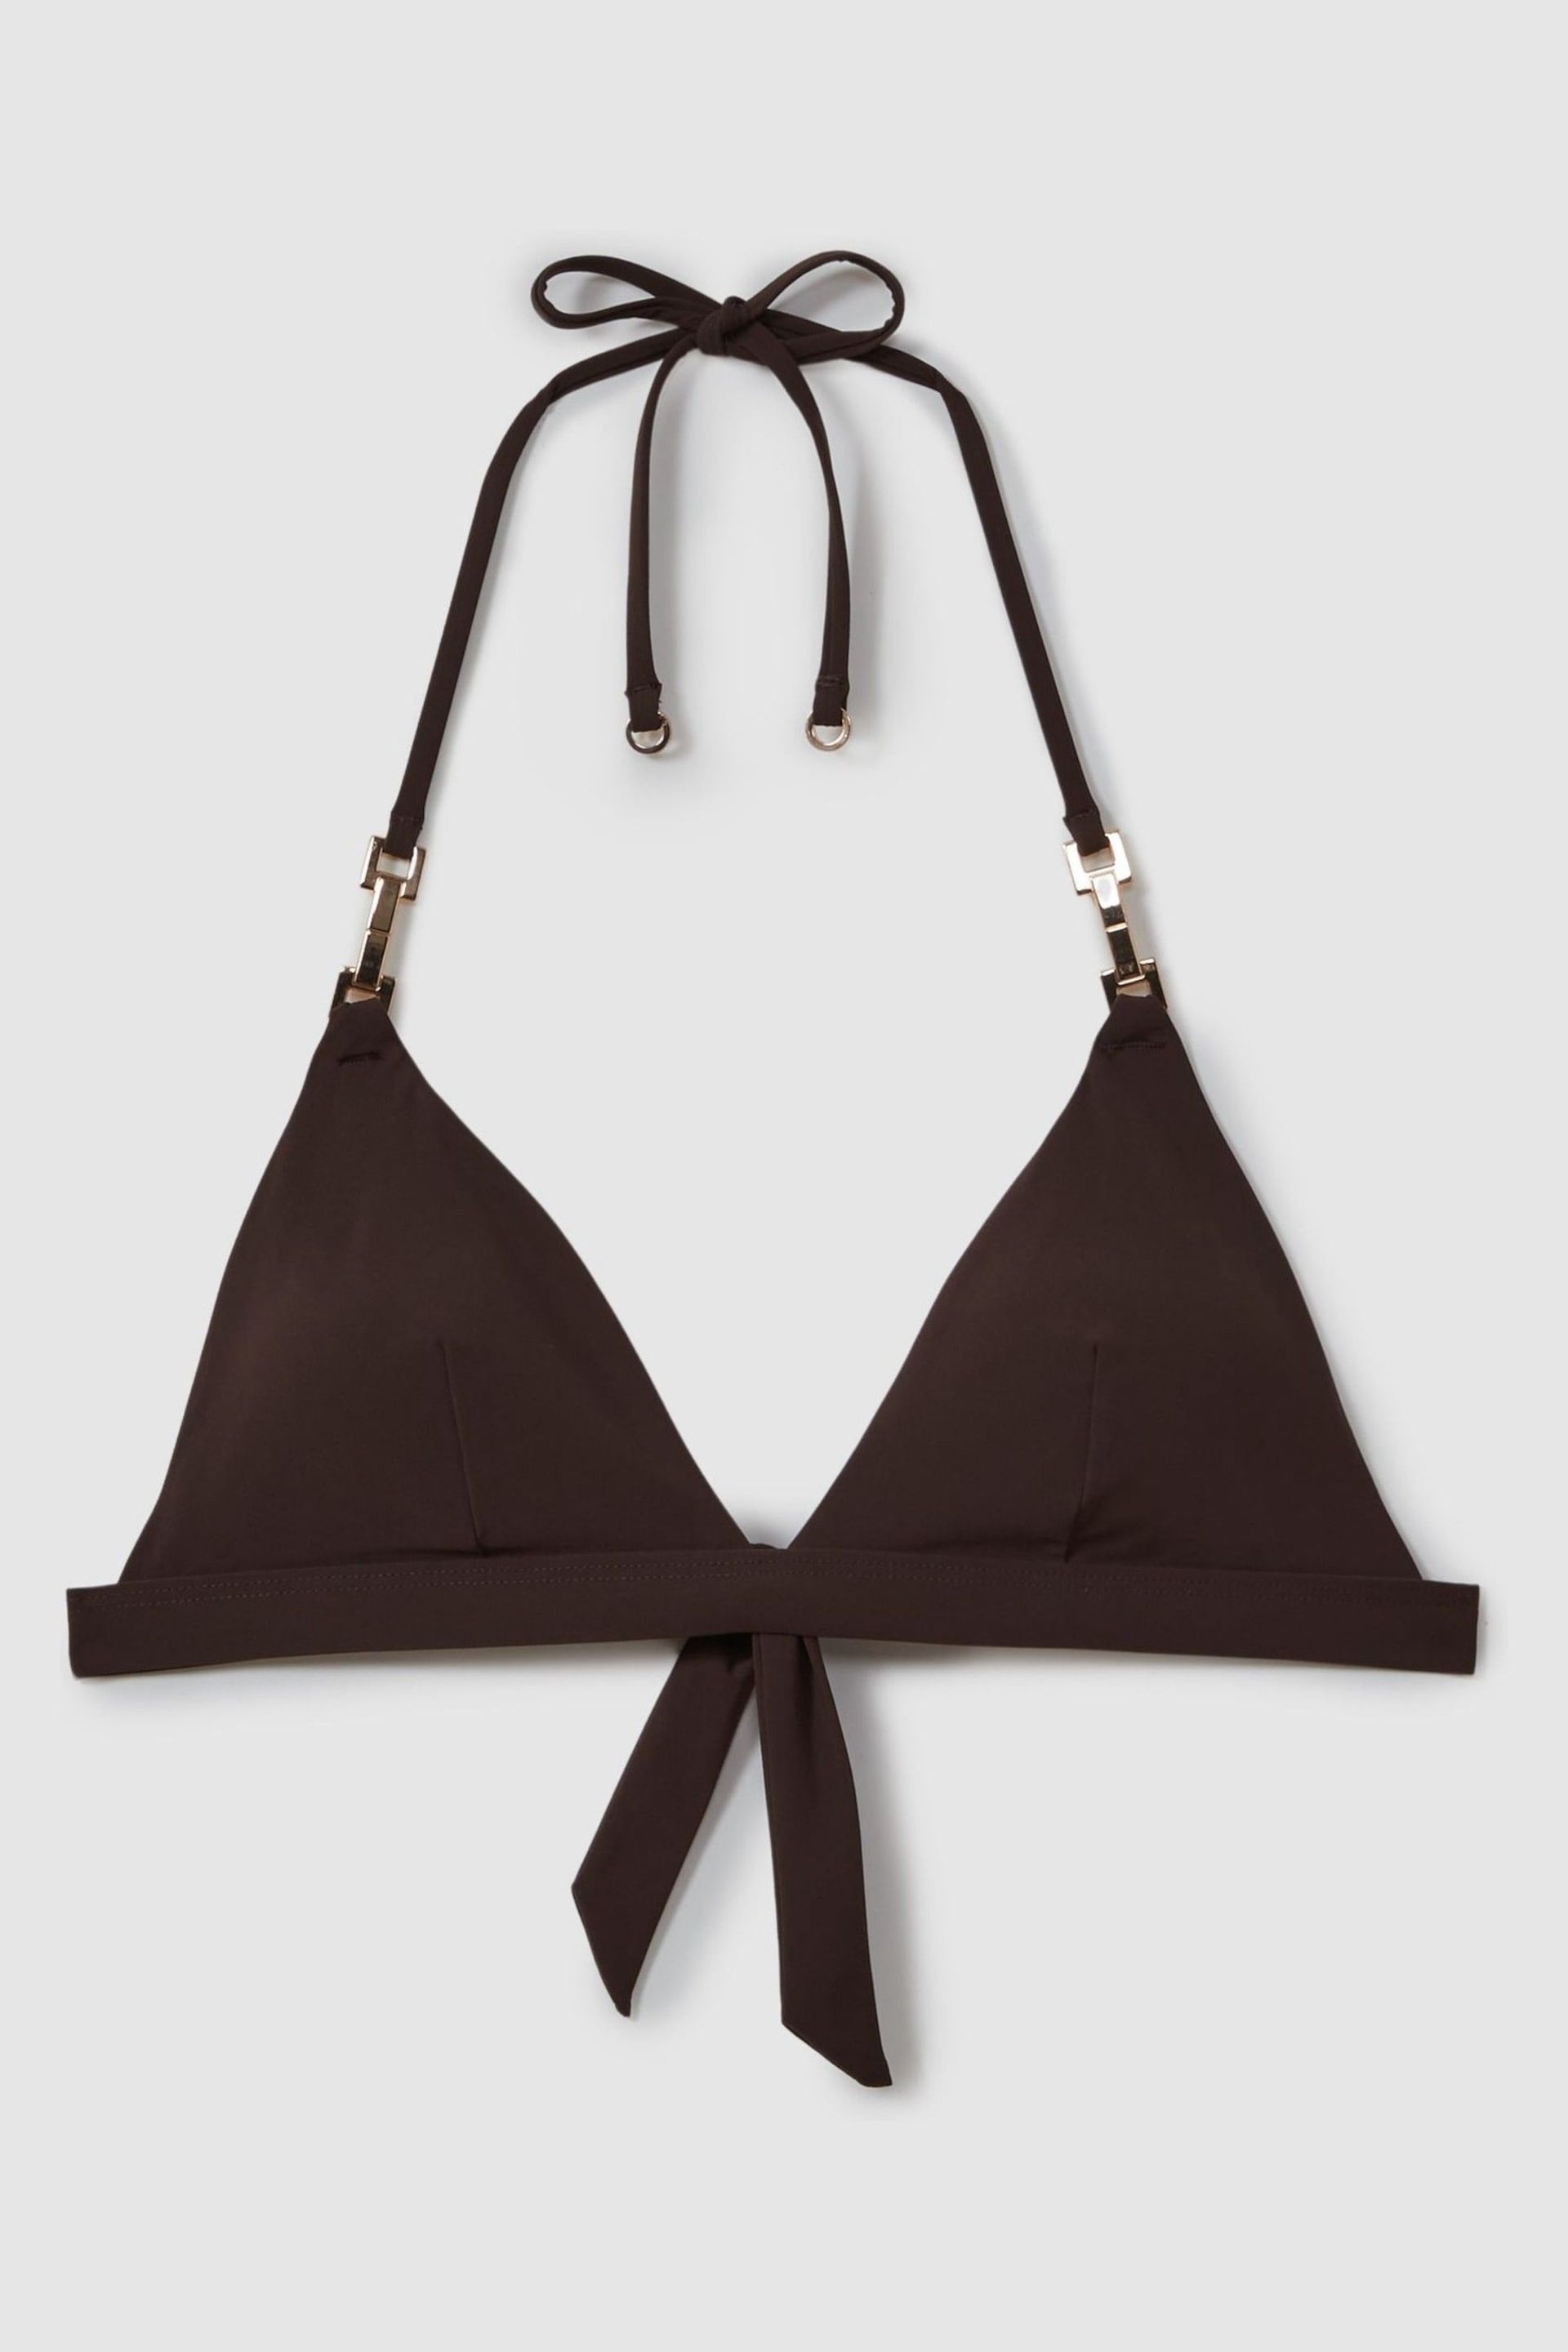 Reiss Chocolate Riah Triangle Halter Neck Bikini Top - Image 2 of 5